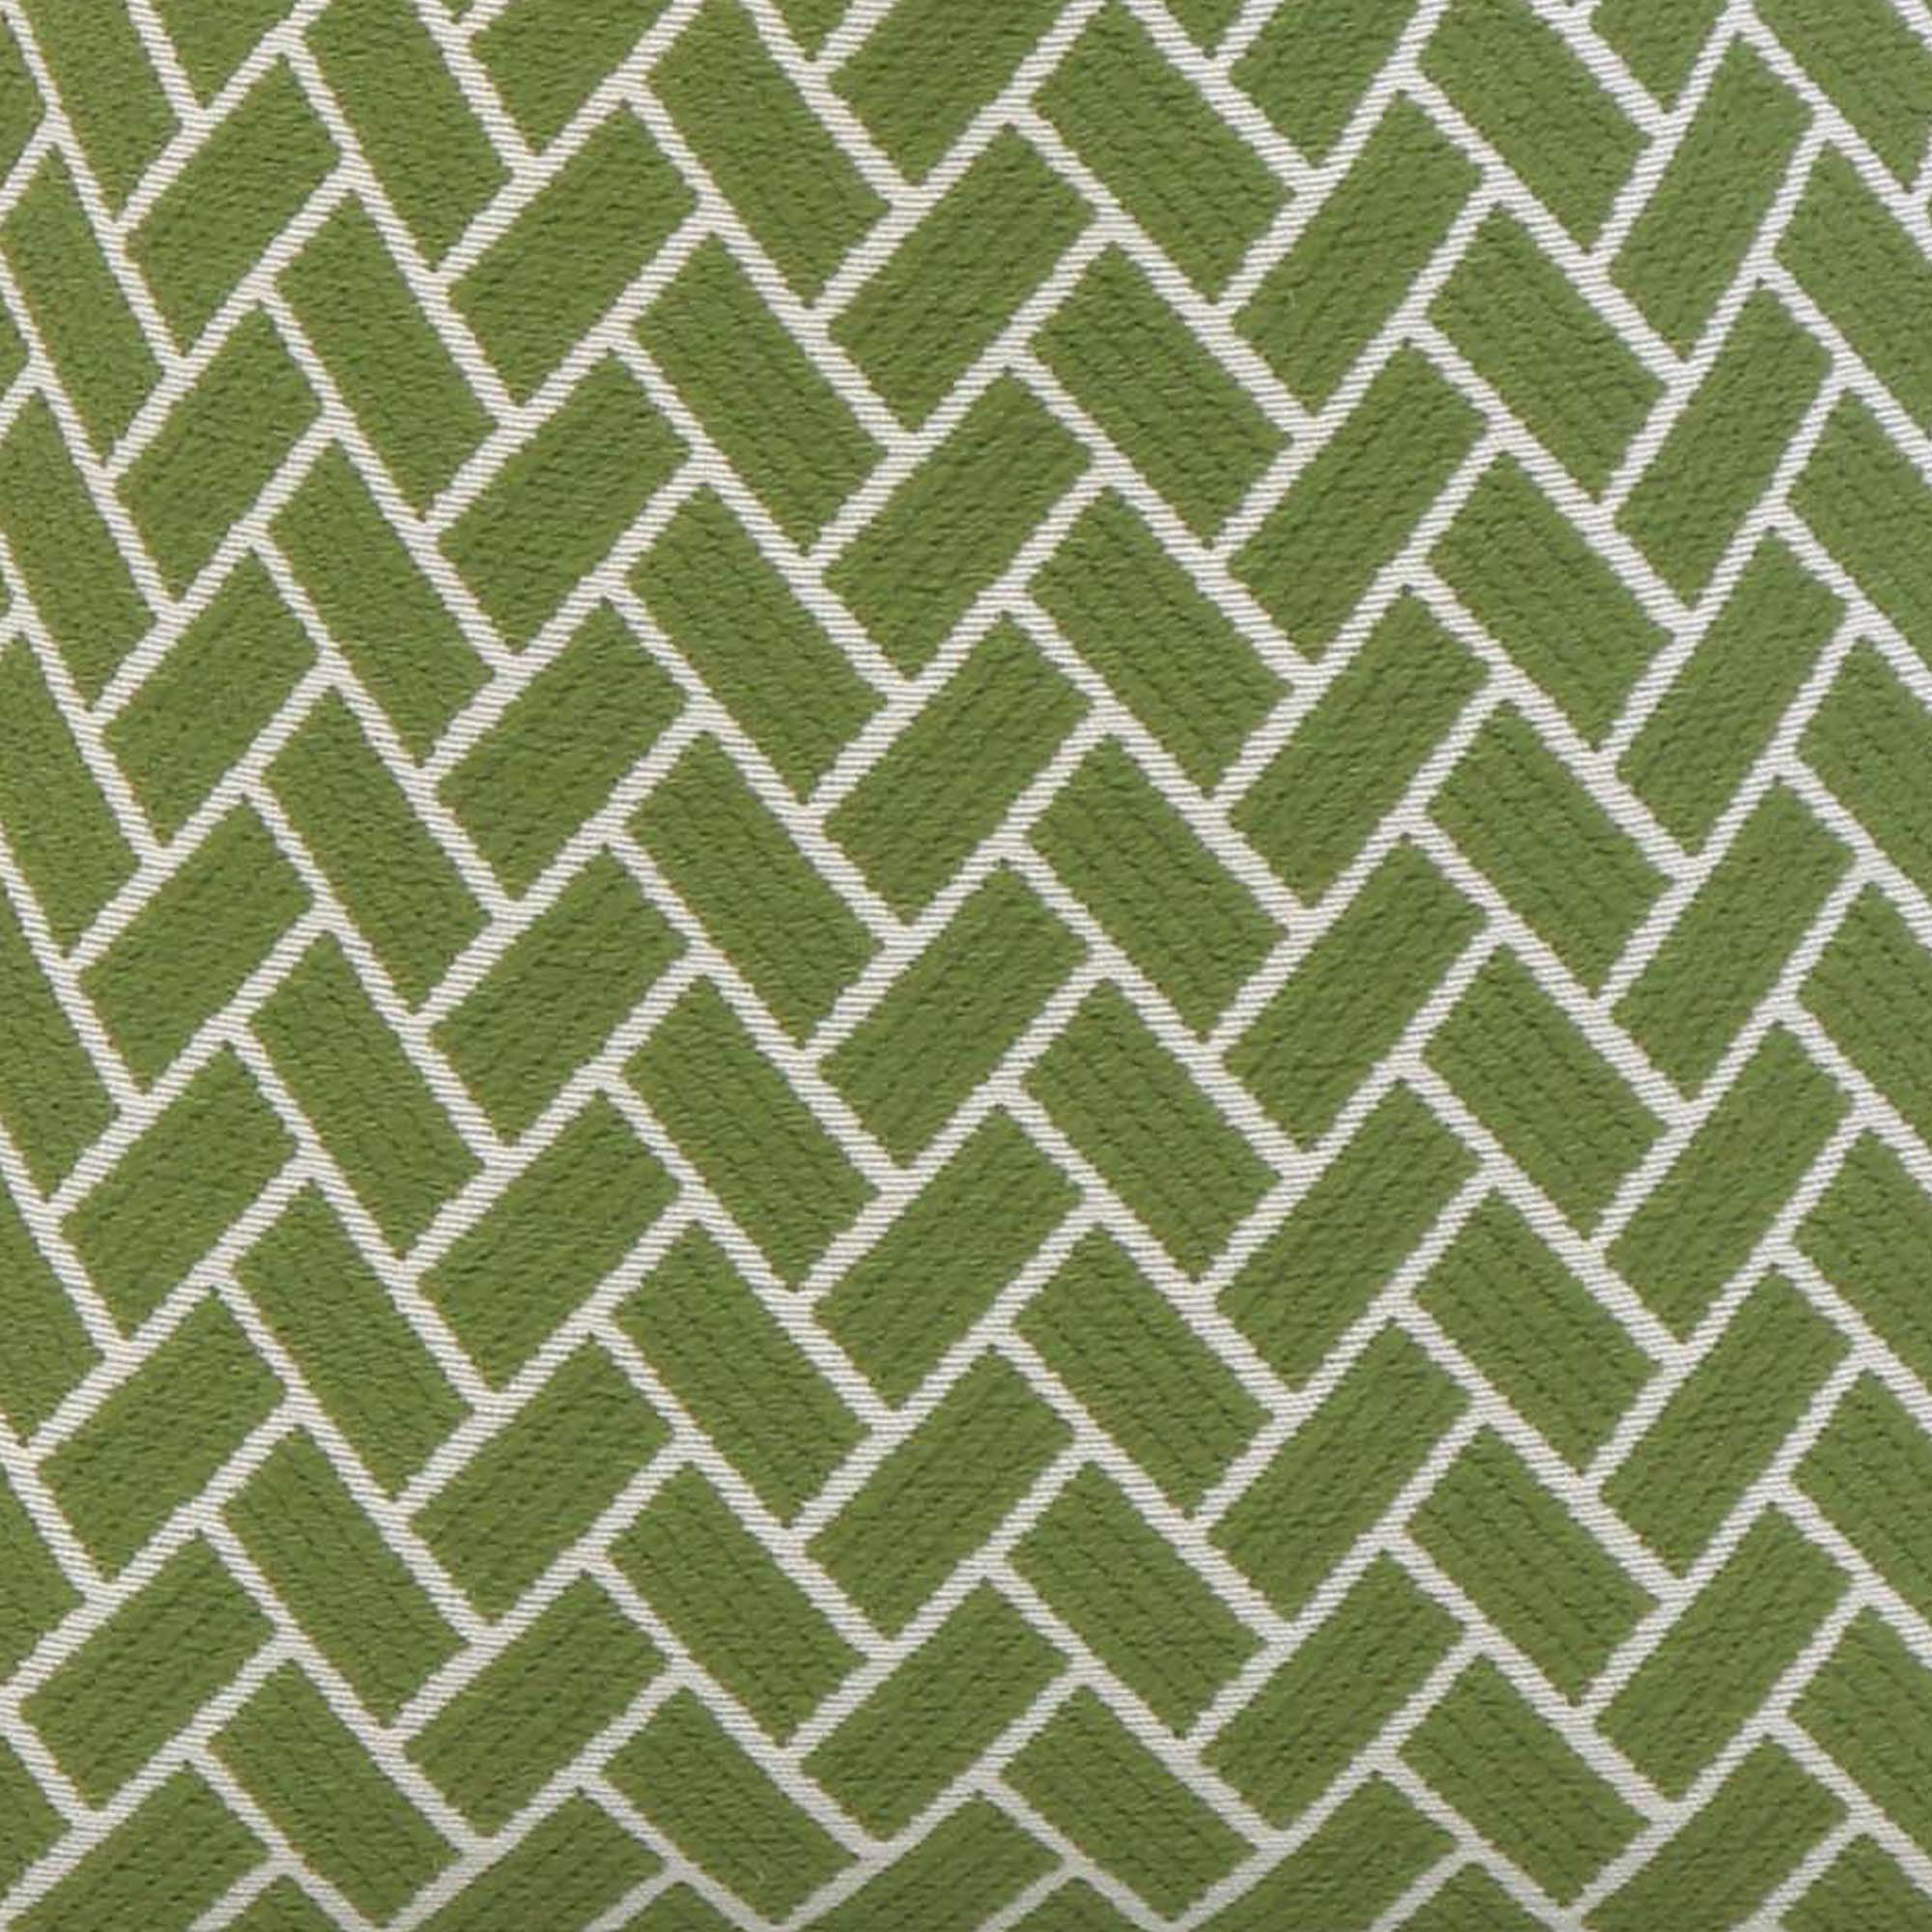 Cobblestone Performance Spring / 4x4 inch Fabric Swatch